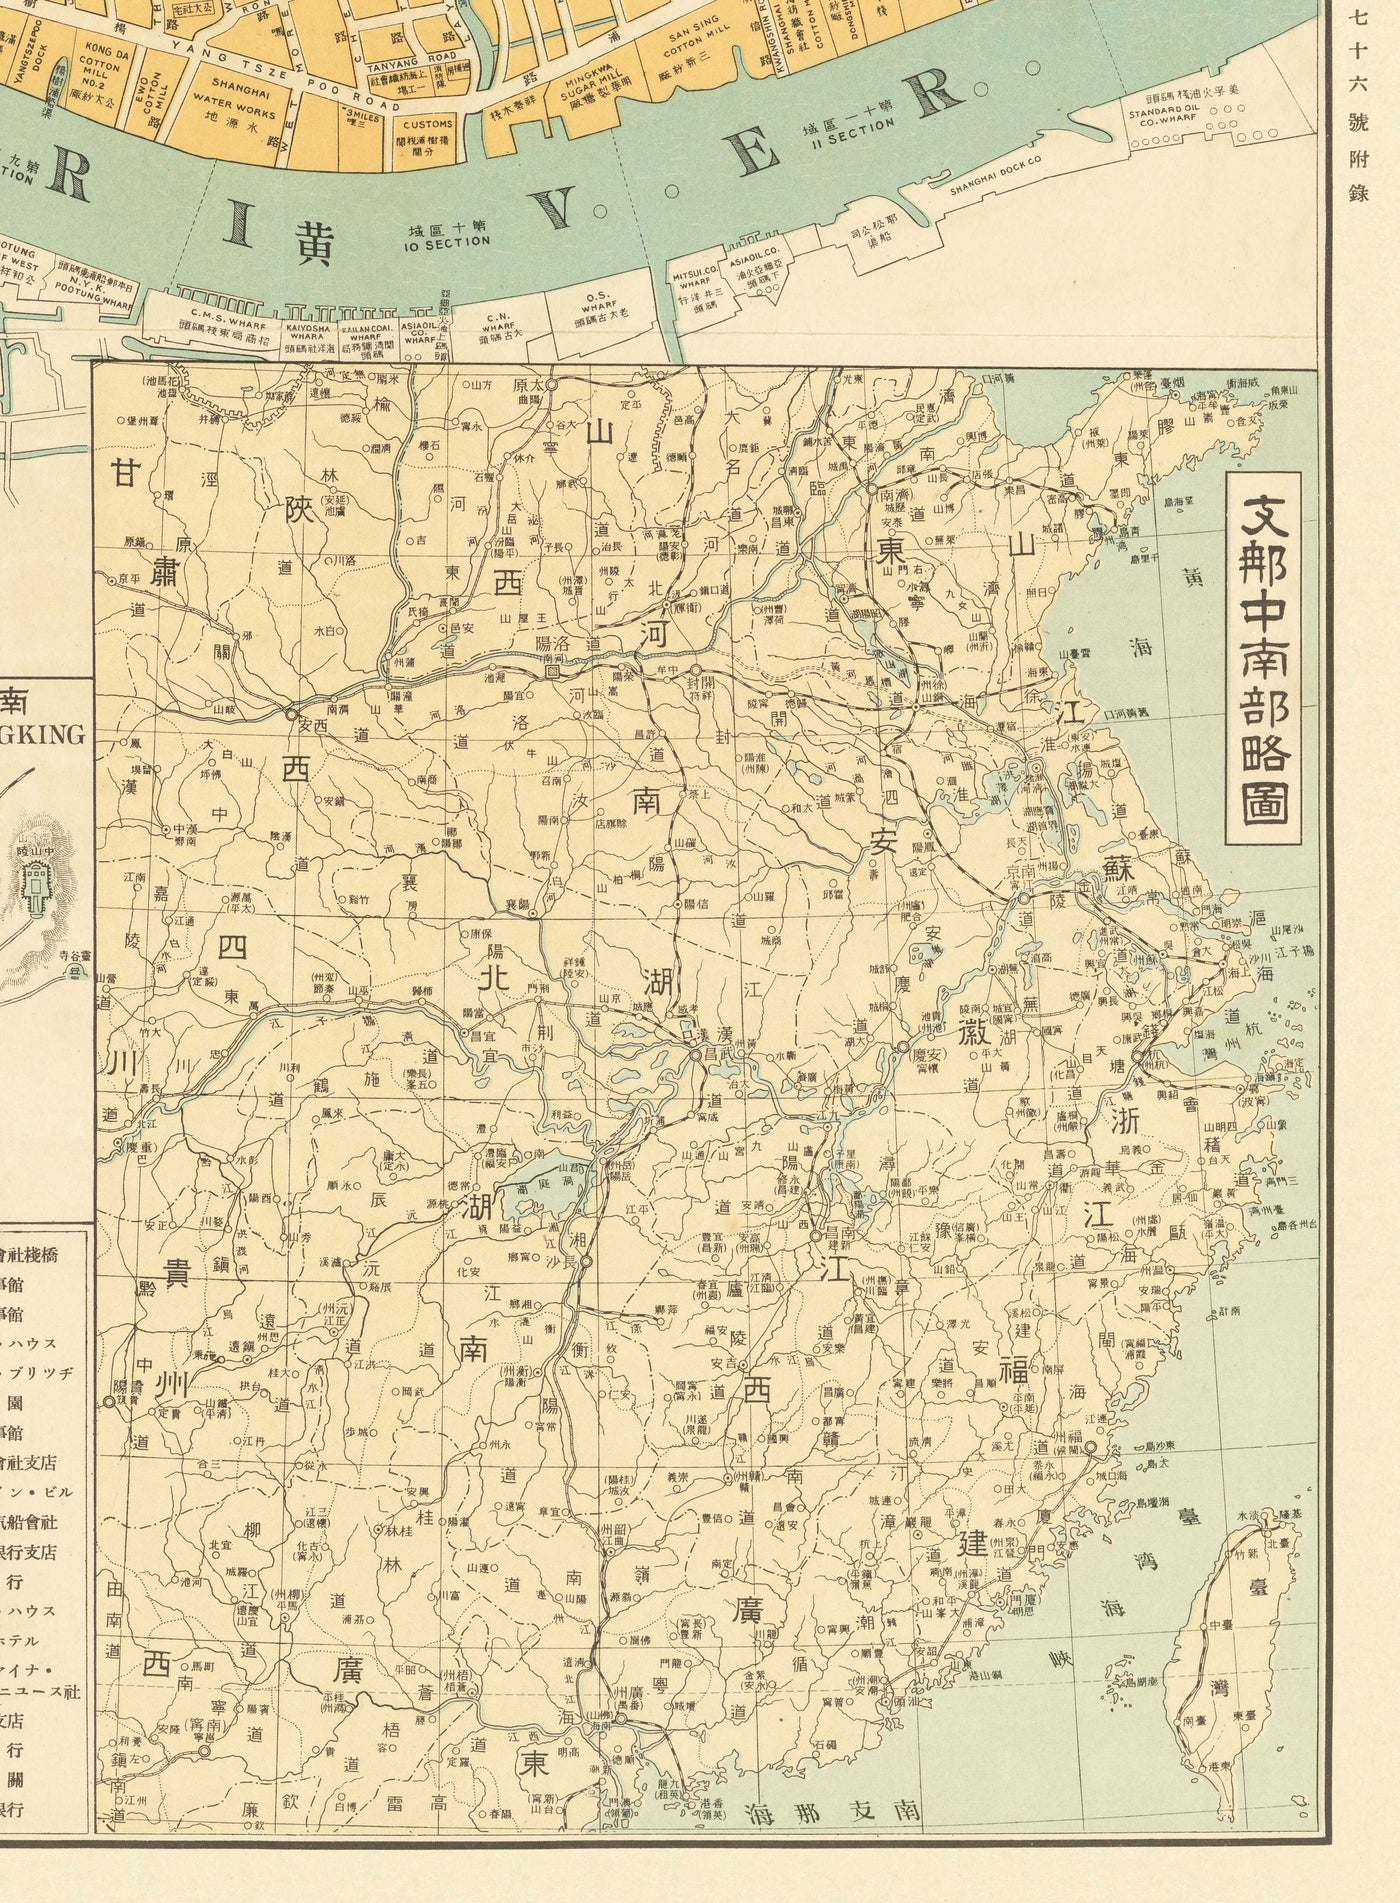 Old Map of Shanghai in 1935 by Osaka Daily News - Huangpu River, Yangpu District, Pudong, Lujiazui, Jing'an